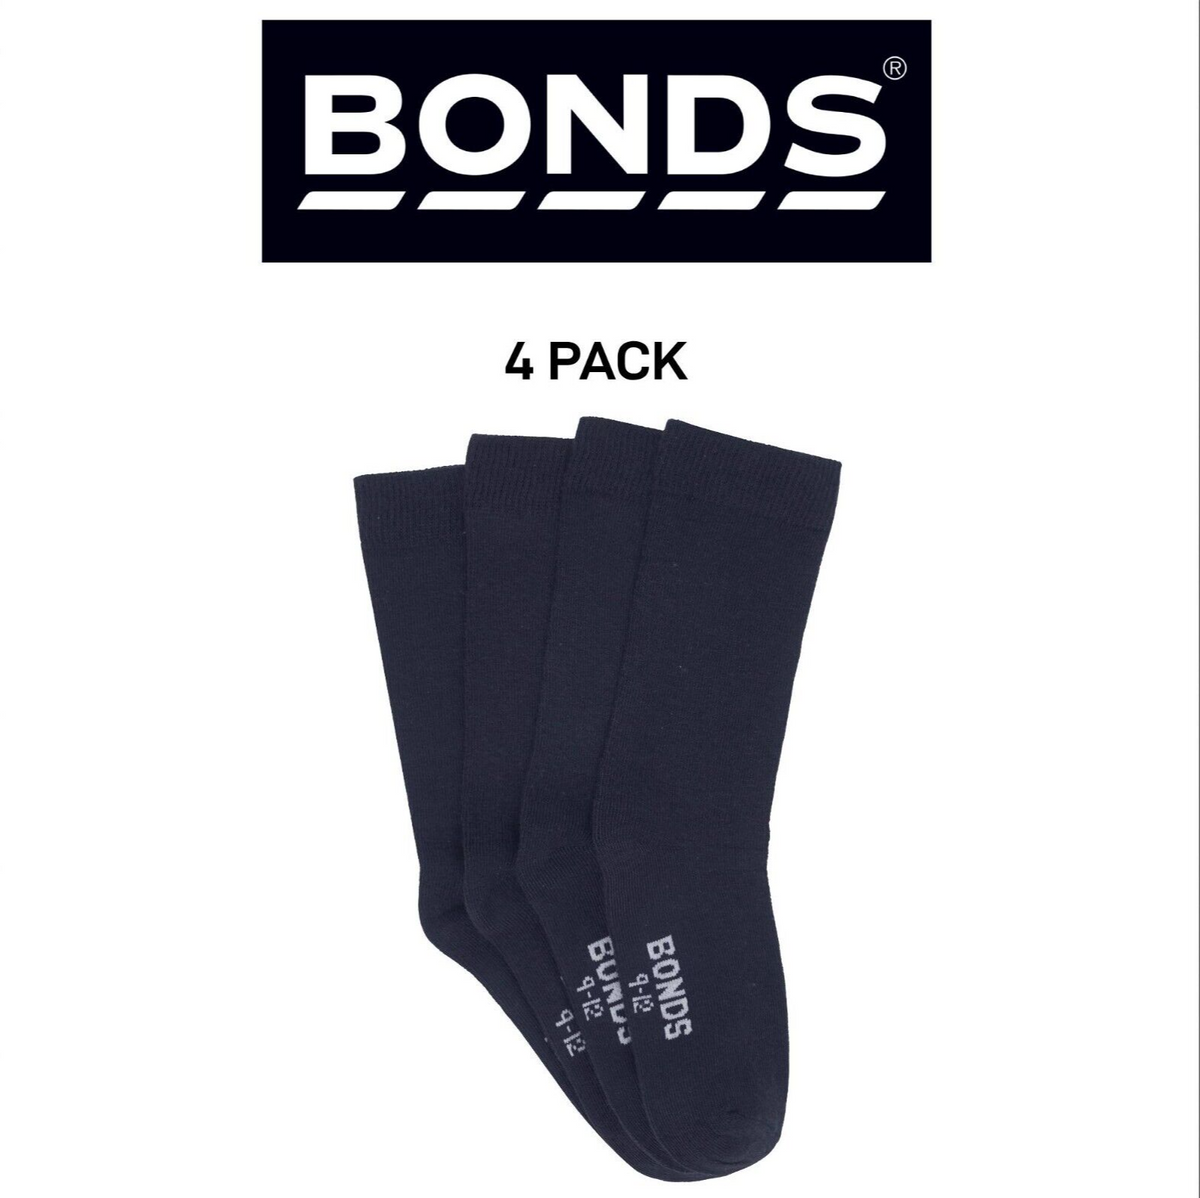 Bonds Kids School Oxford Crew Socks Ultimate Comfort and Softness 4 Pack RY4X4N